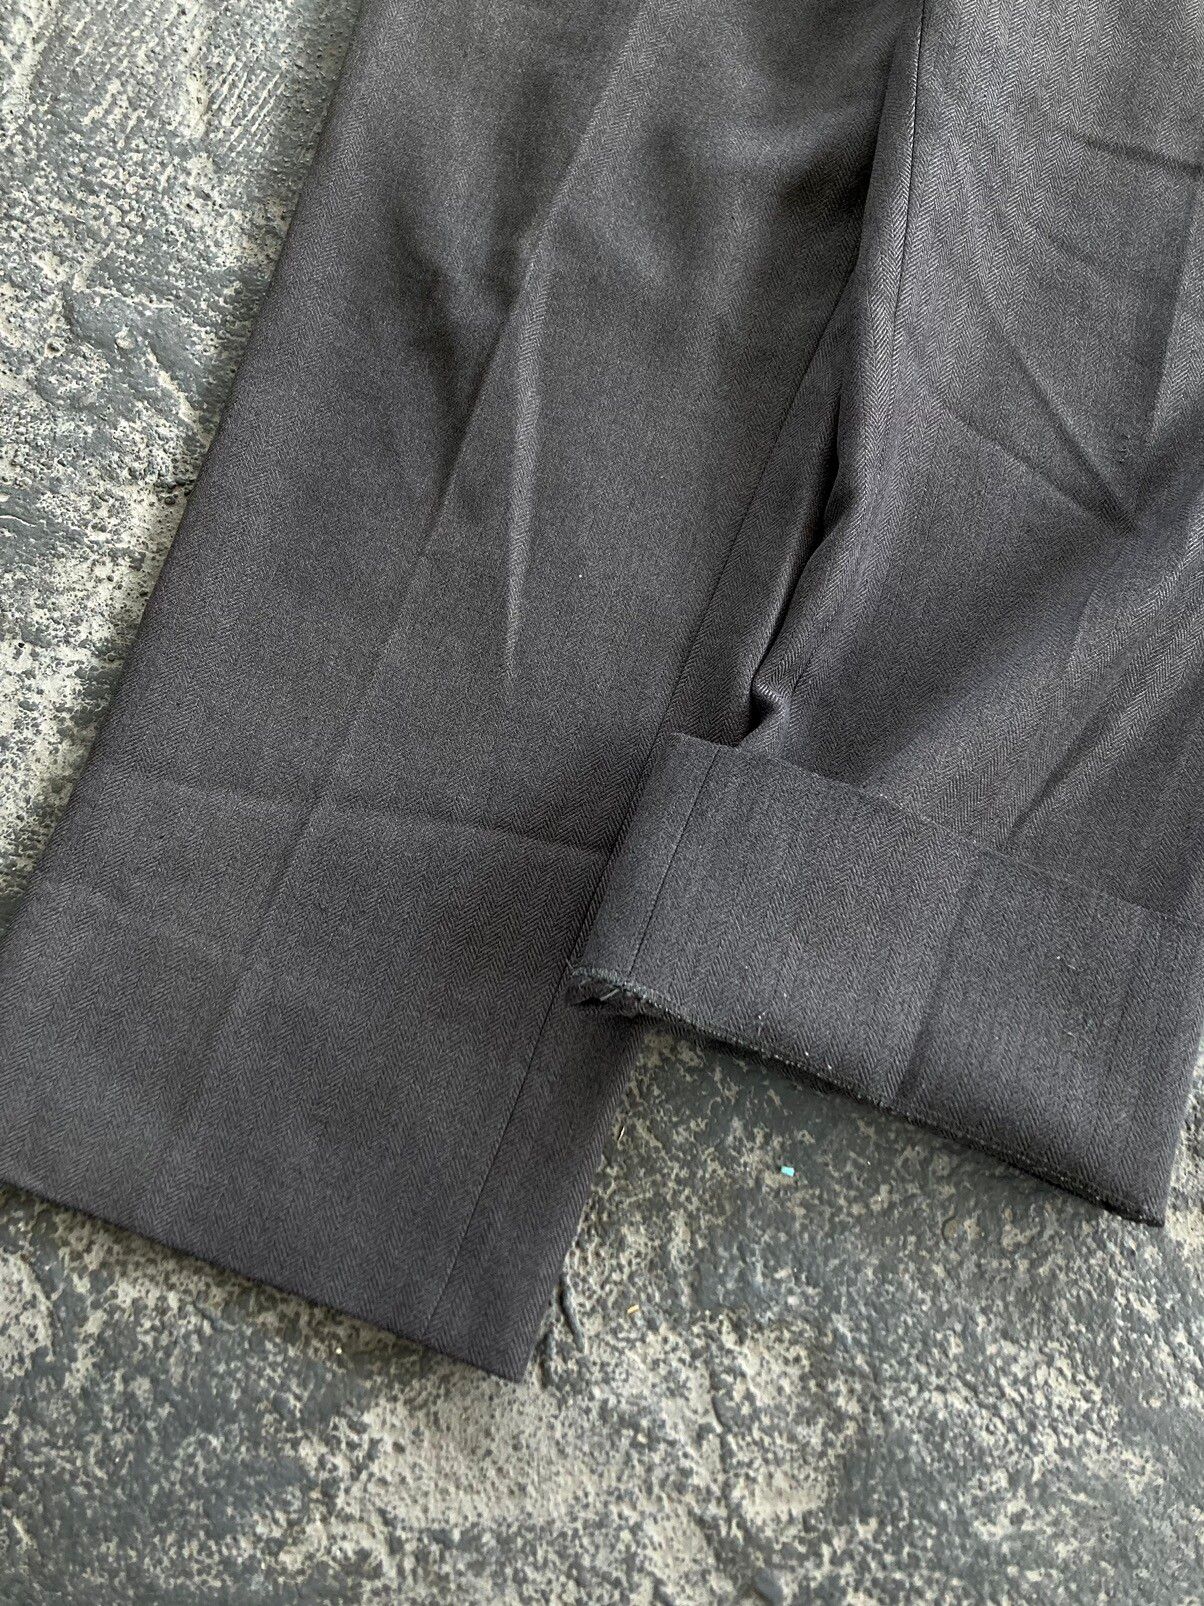 Vintage Japanese Dark Gray Baggy Slacks - 3